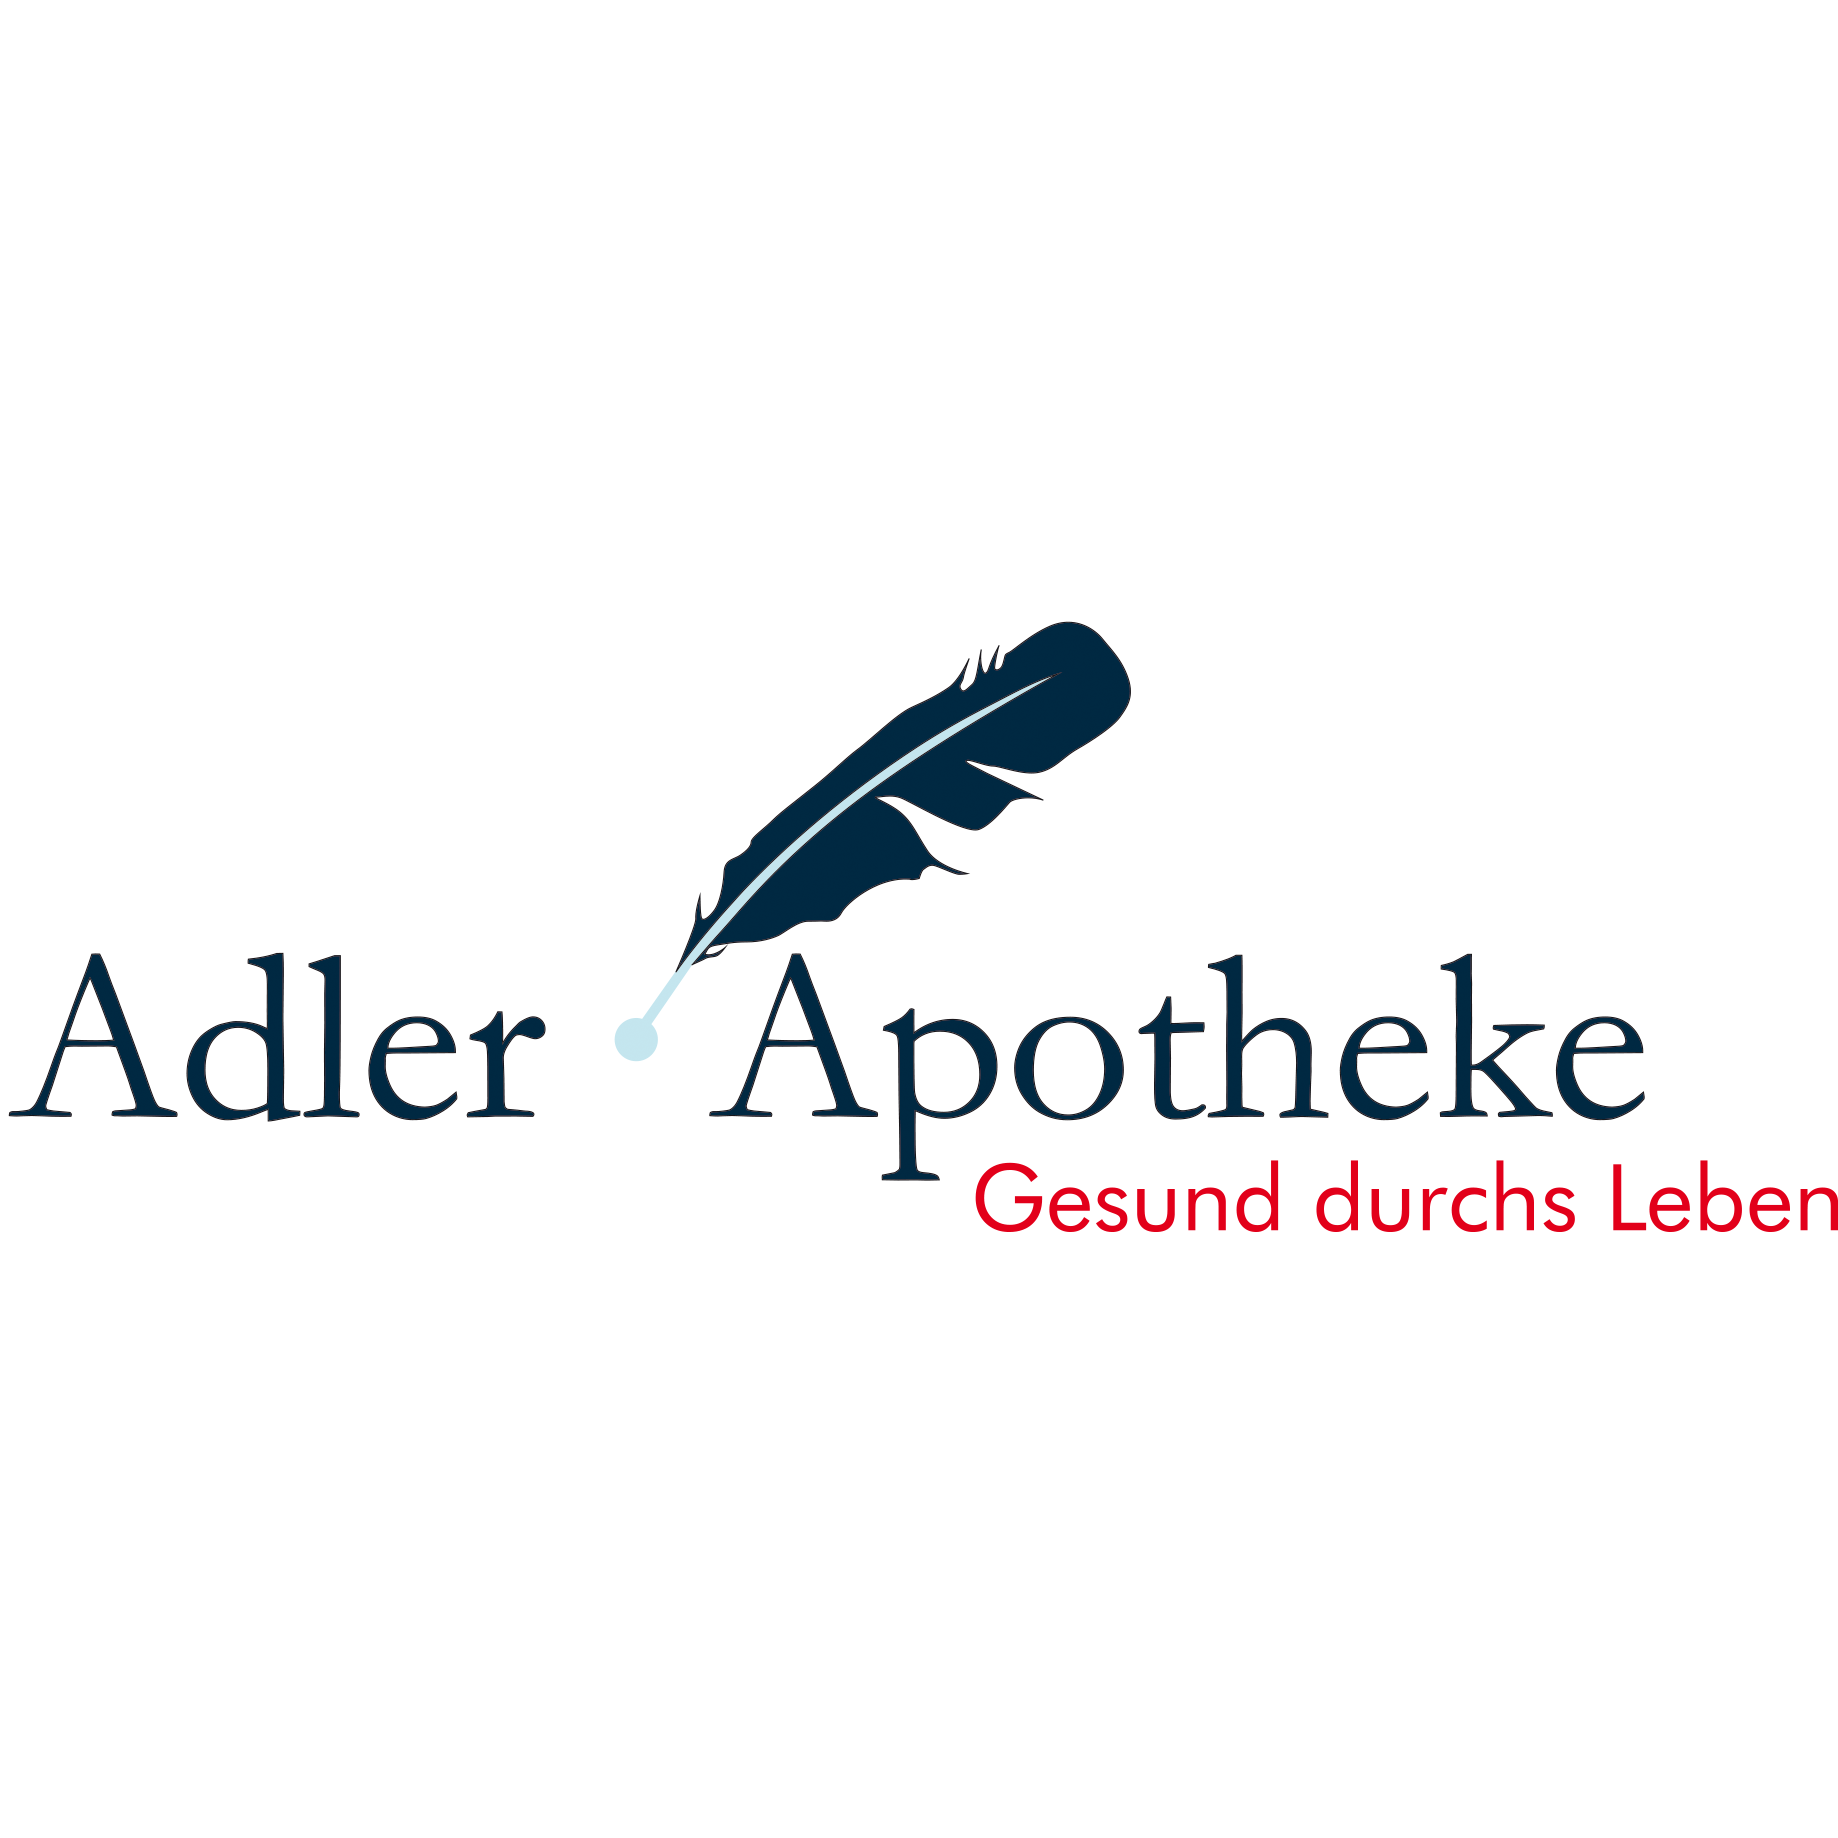 Adler-Apotheke in Nauen in Brandenburg - Logo